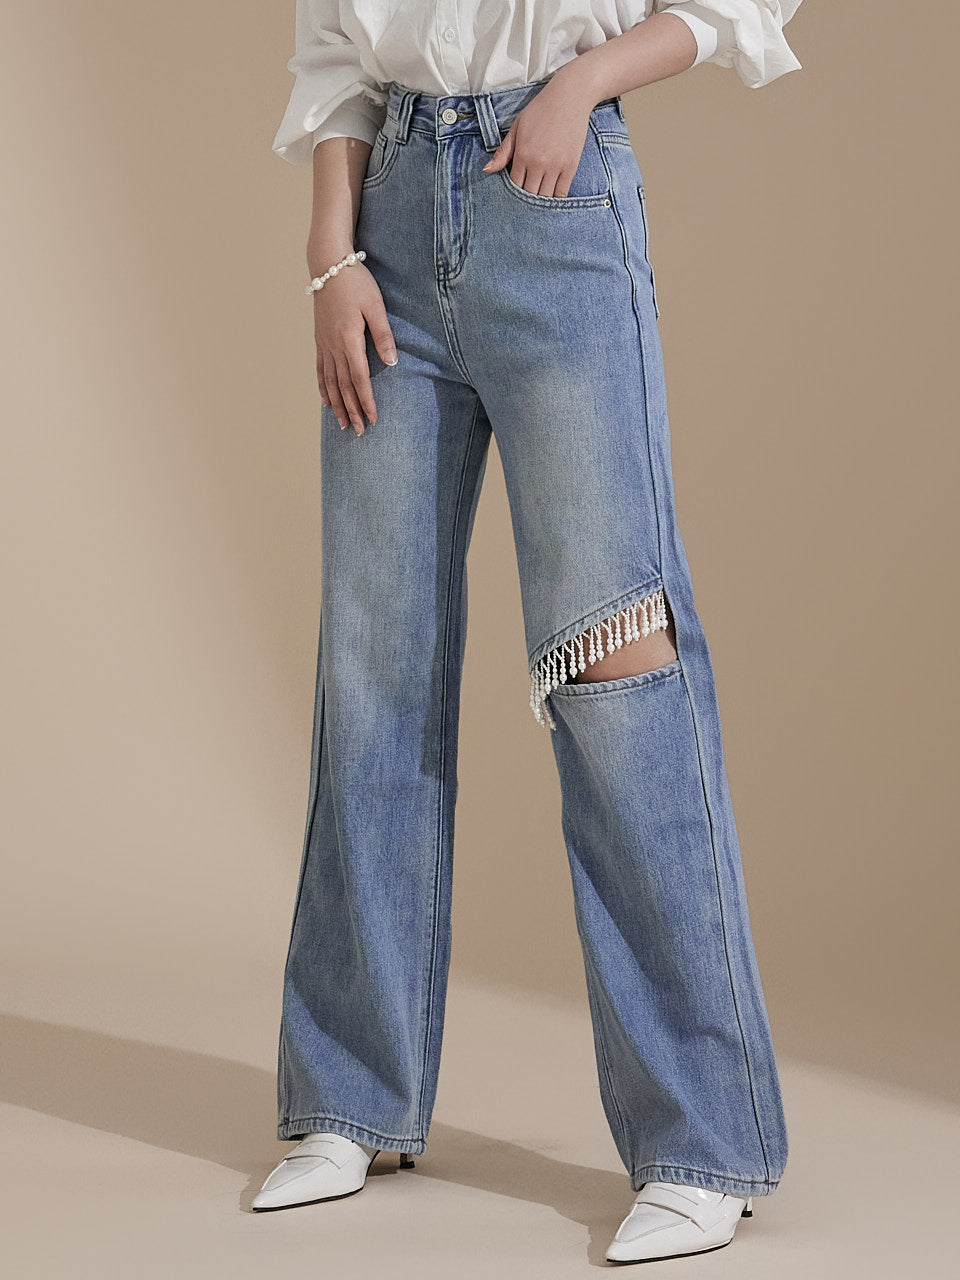 PJ504 Fringe Jeans